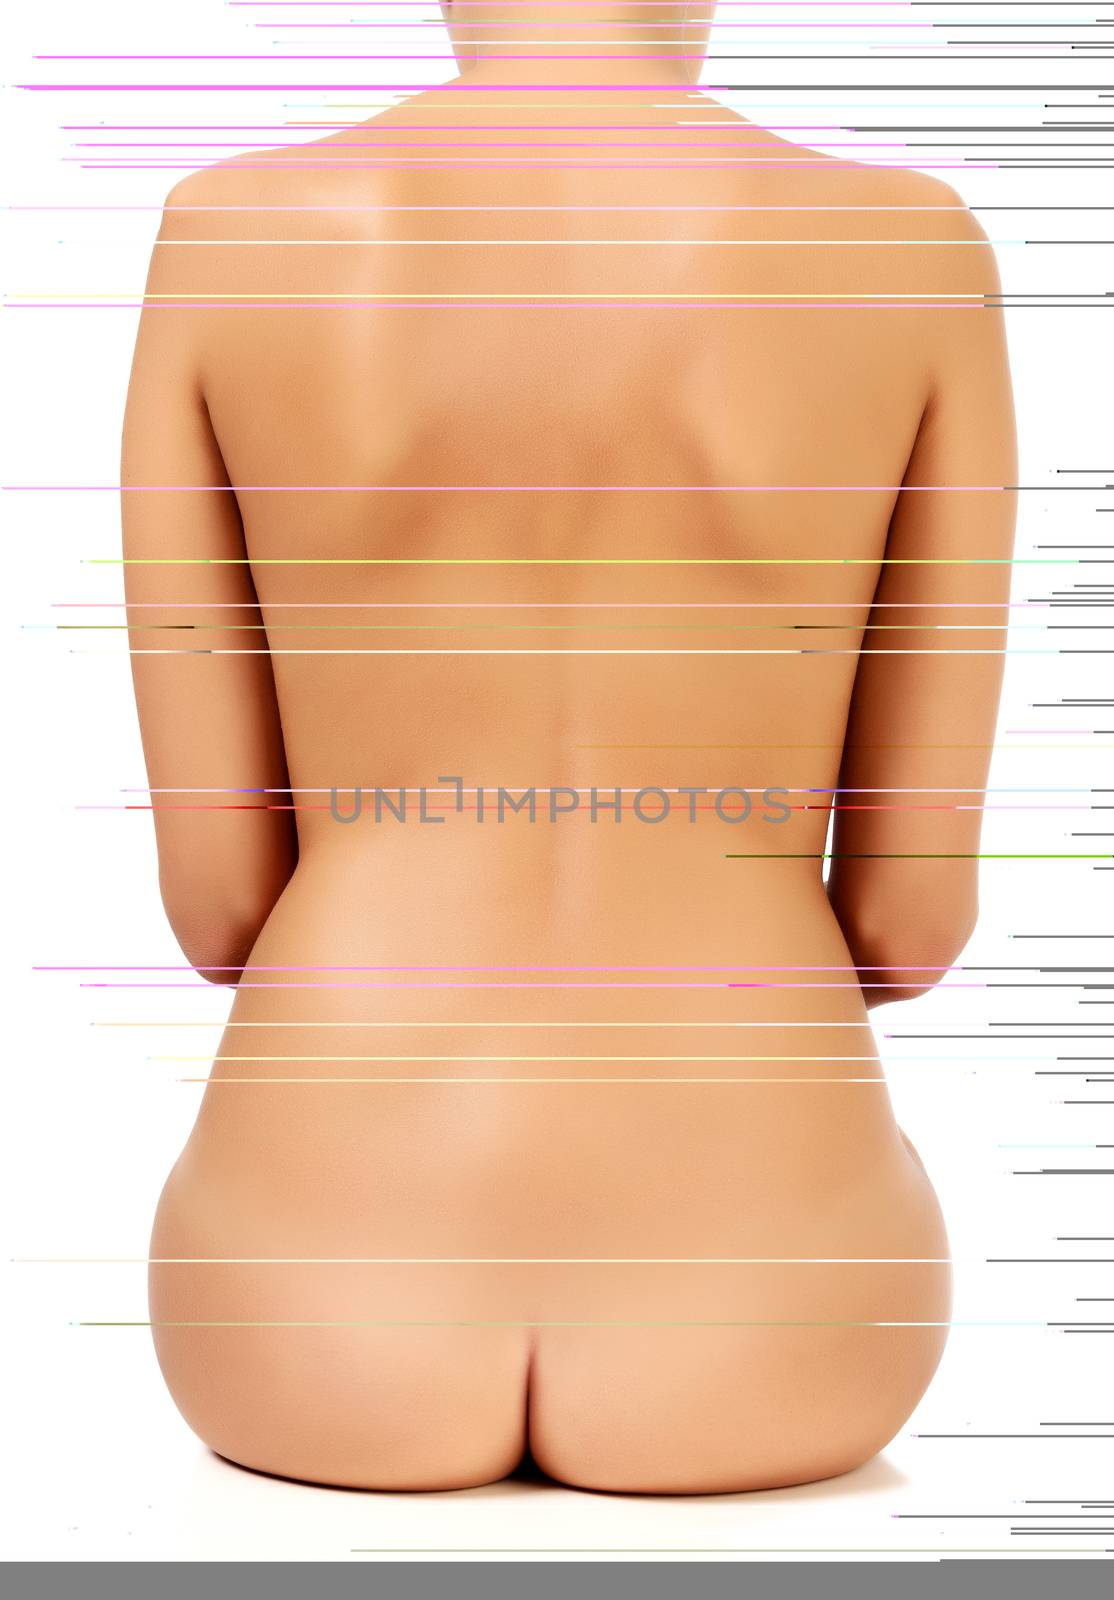 Naked female back by Nobilior